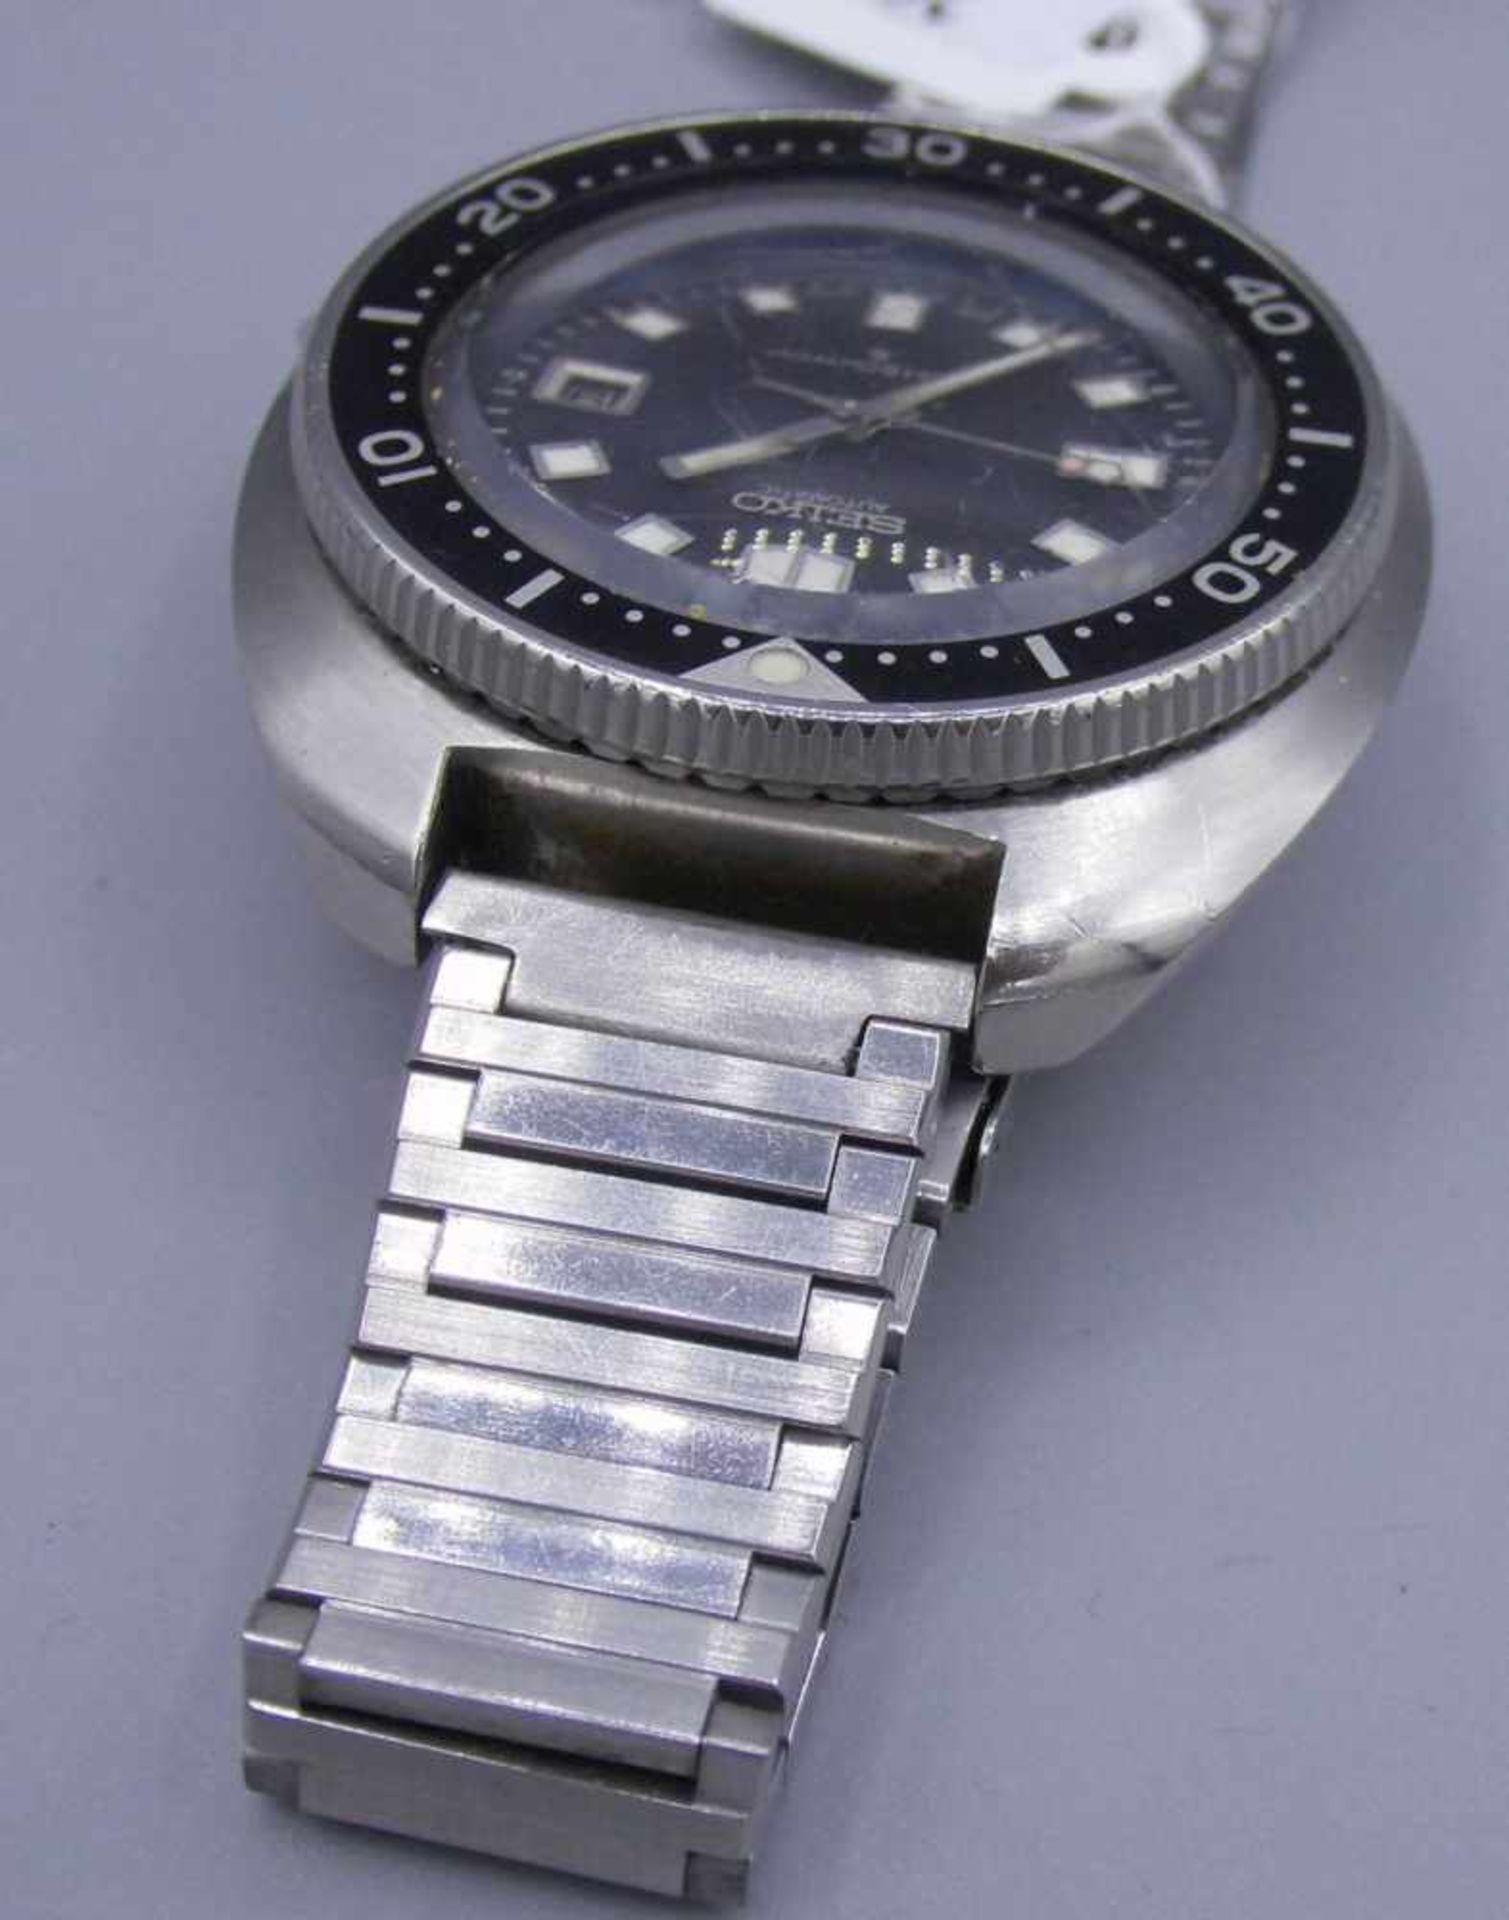 VINTAGE ARMBANDUHR / TAUCHERUHR: SEIKO / divers wristwatch, Automatik-Uhr, 1974, Japan, Stahlgehäuse - Bild 4 aus 7